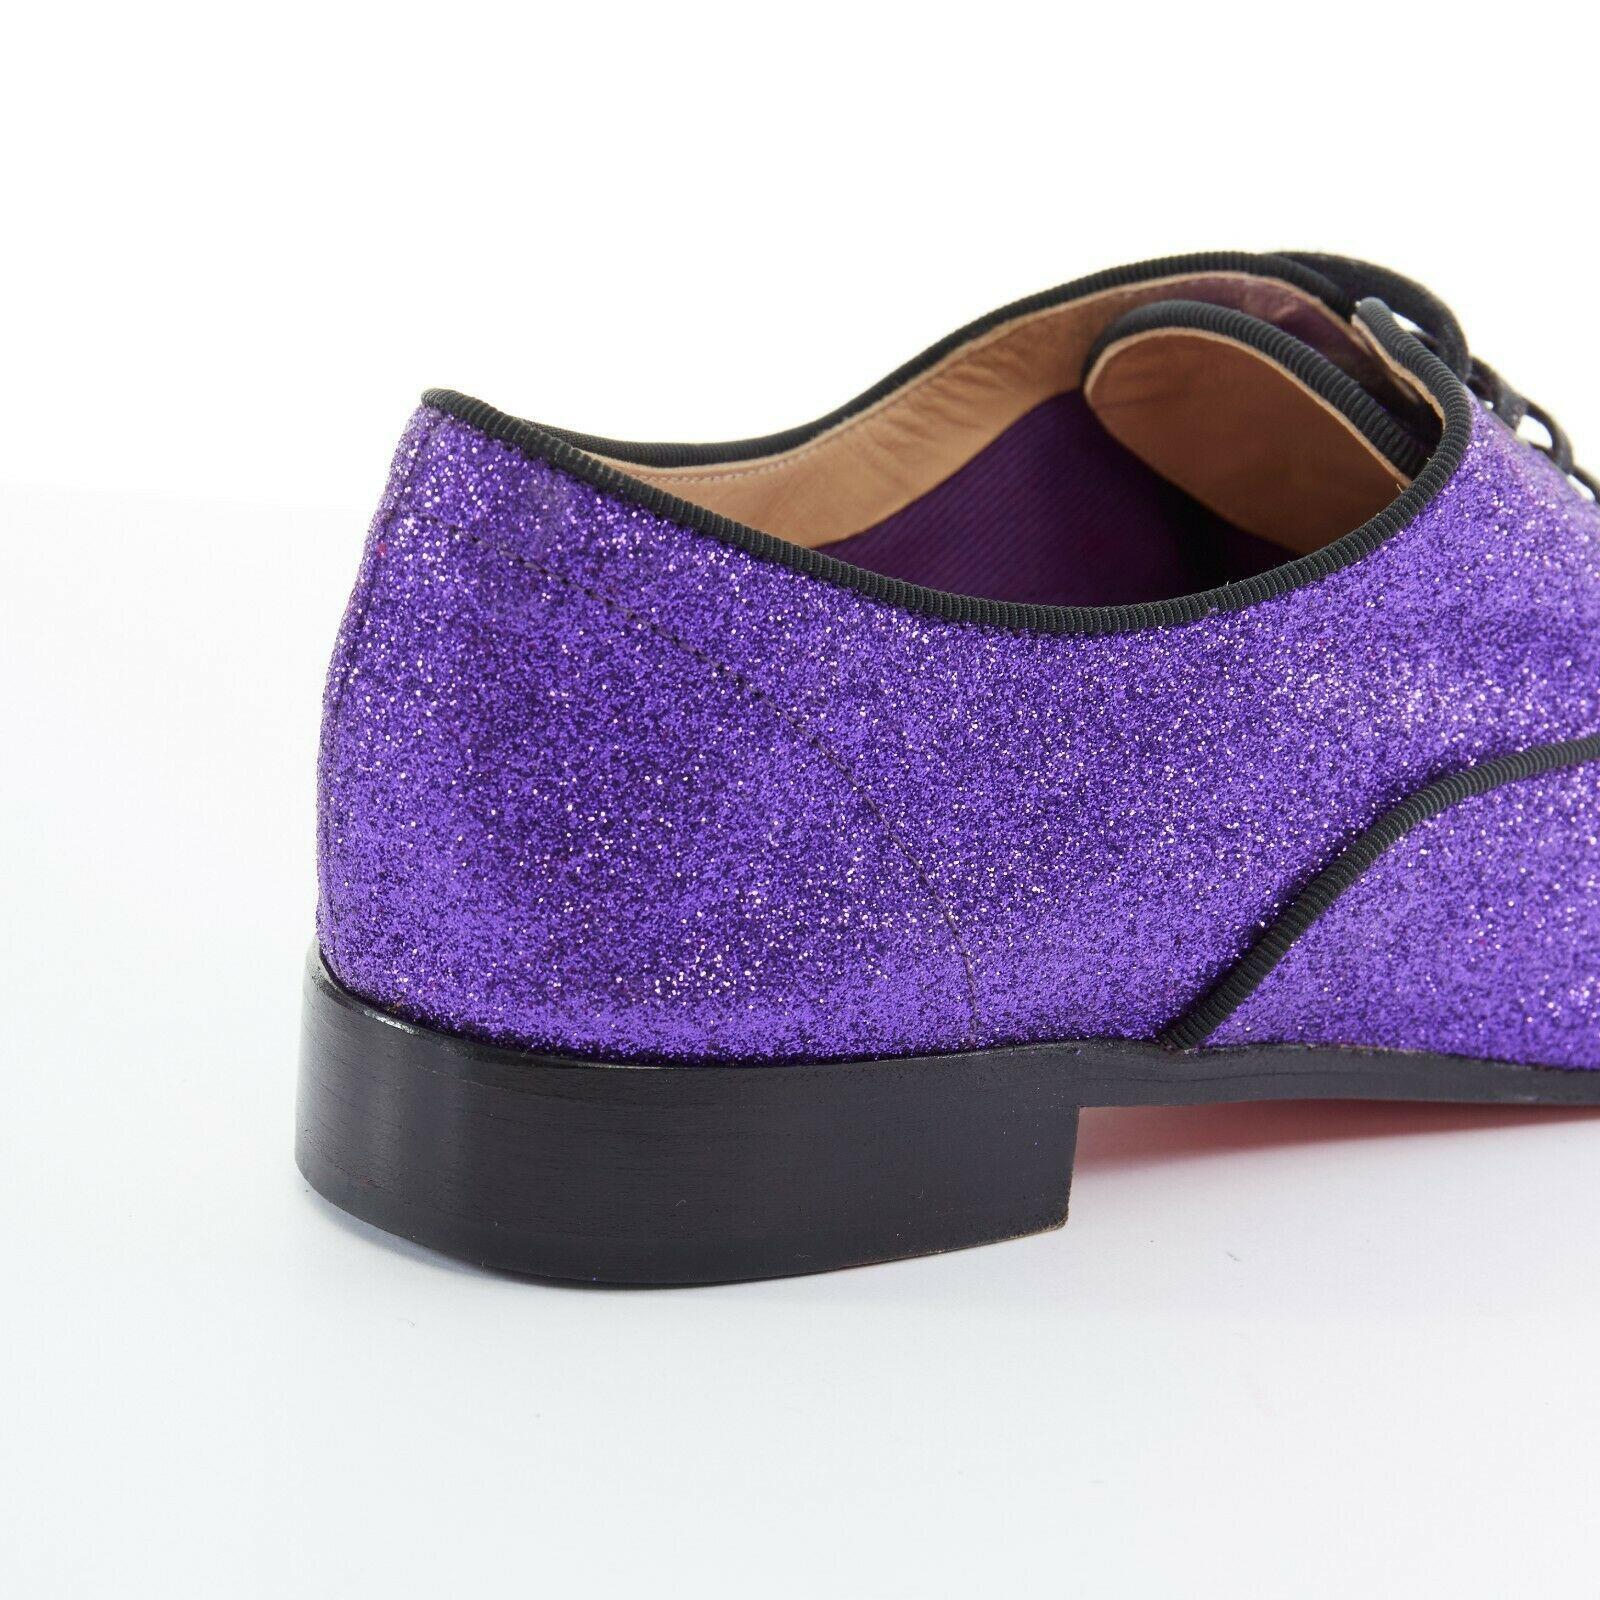 CHRISTIAN LOUBOUTIN Fred Flat purple glitter leather lace derby flat shoe EU37.5 4